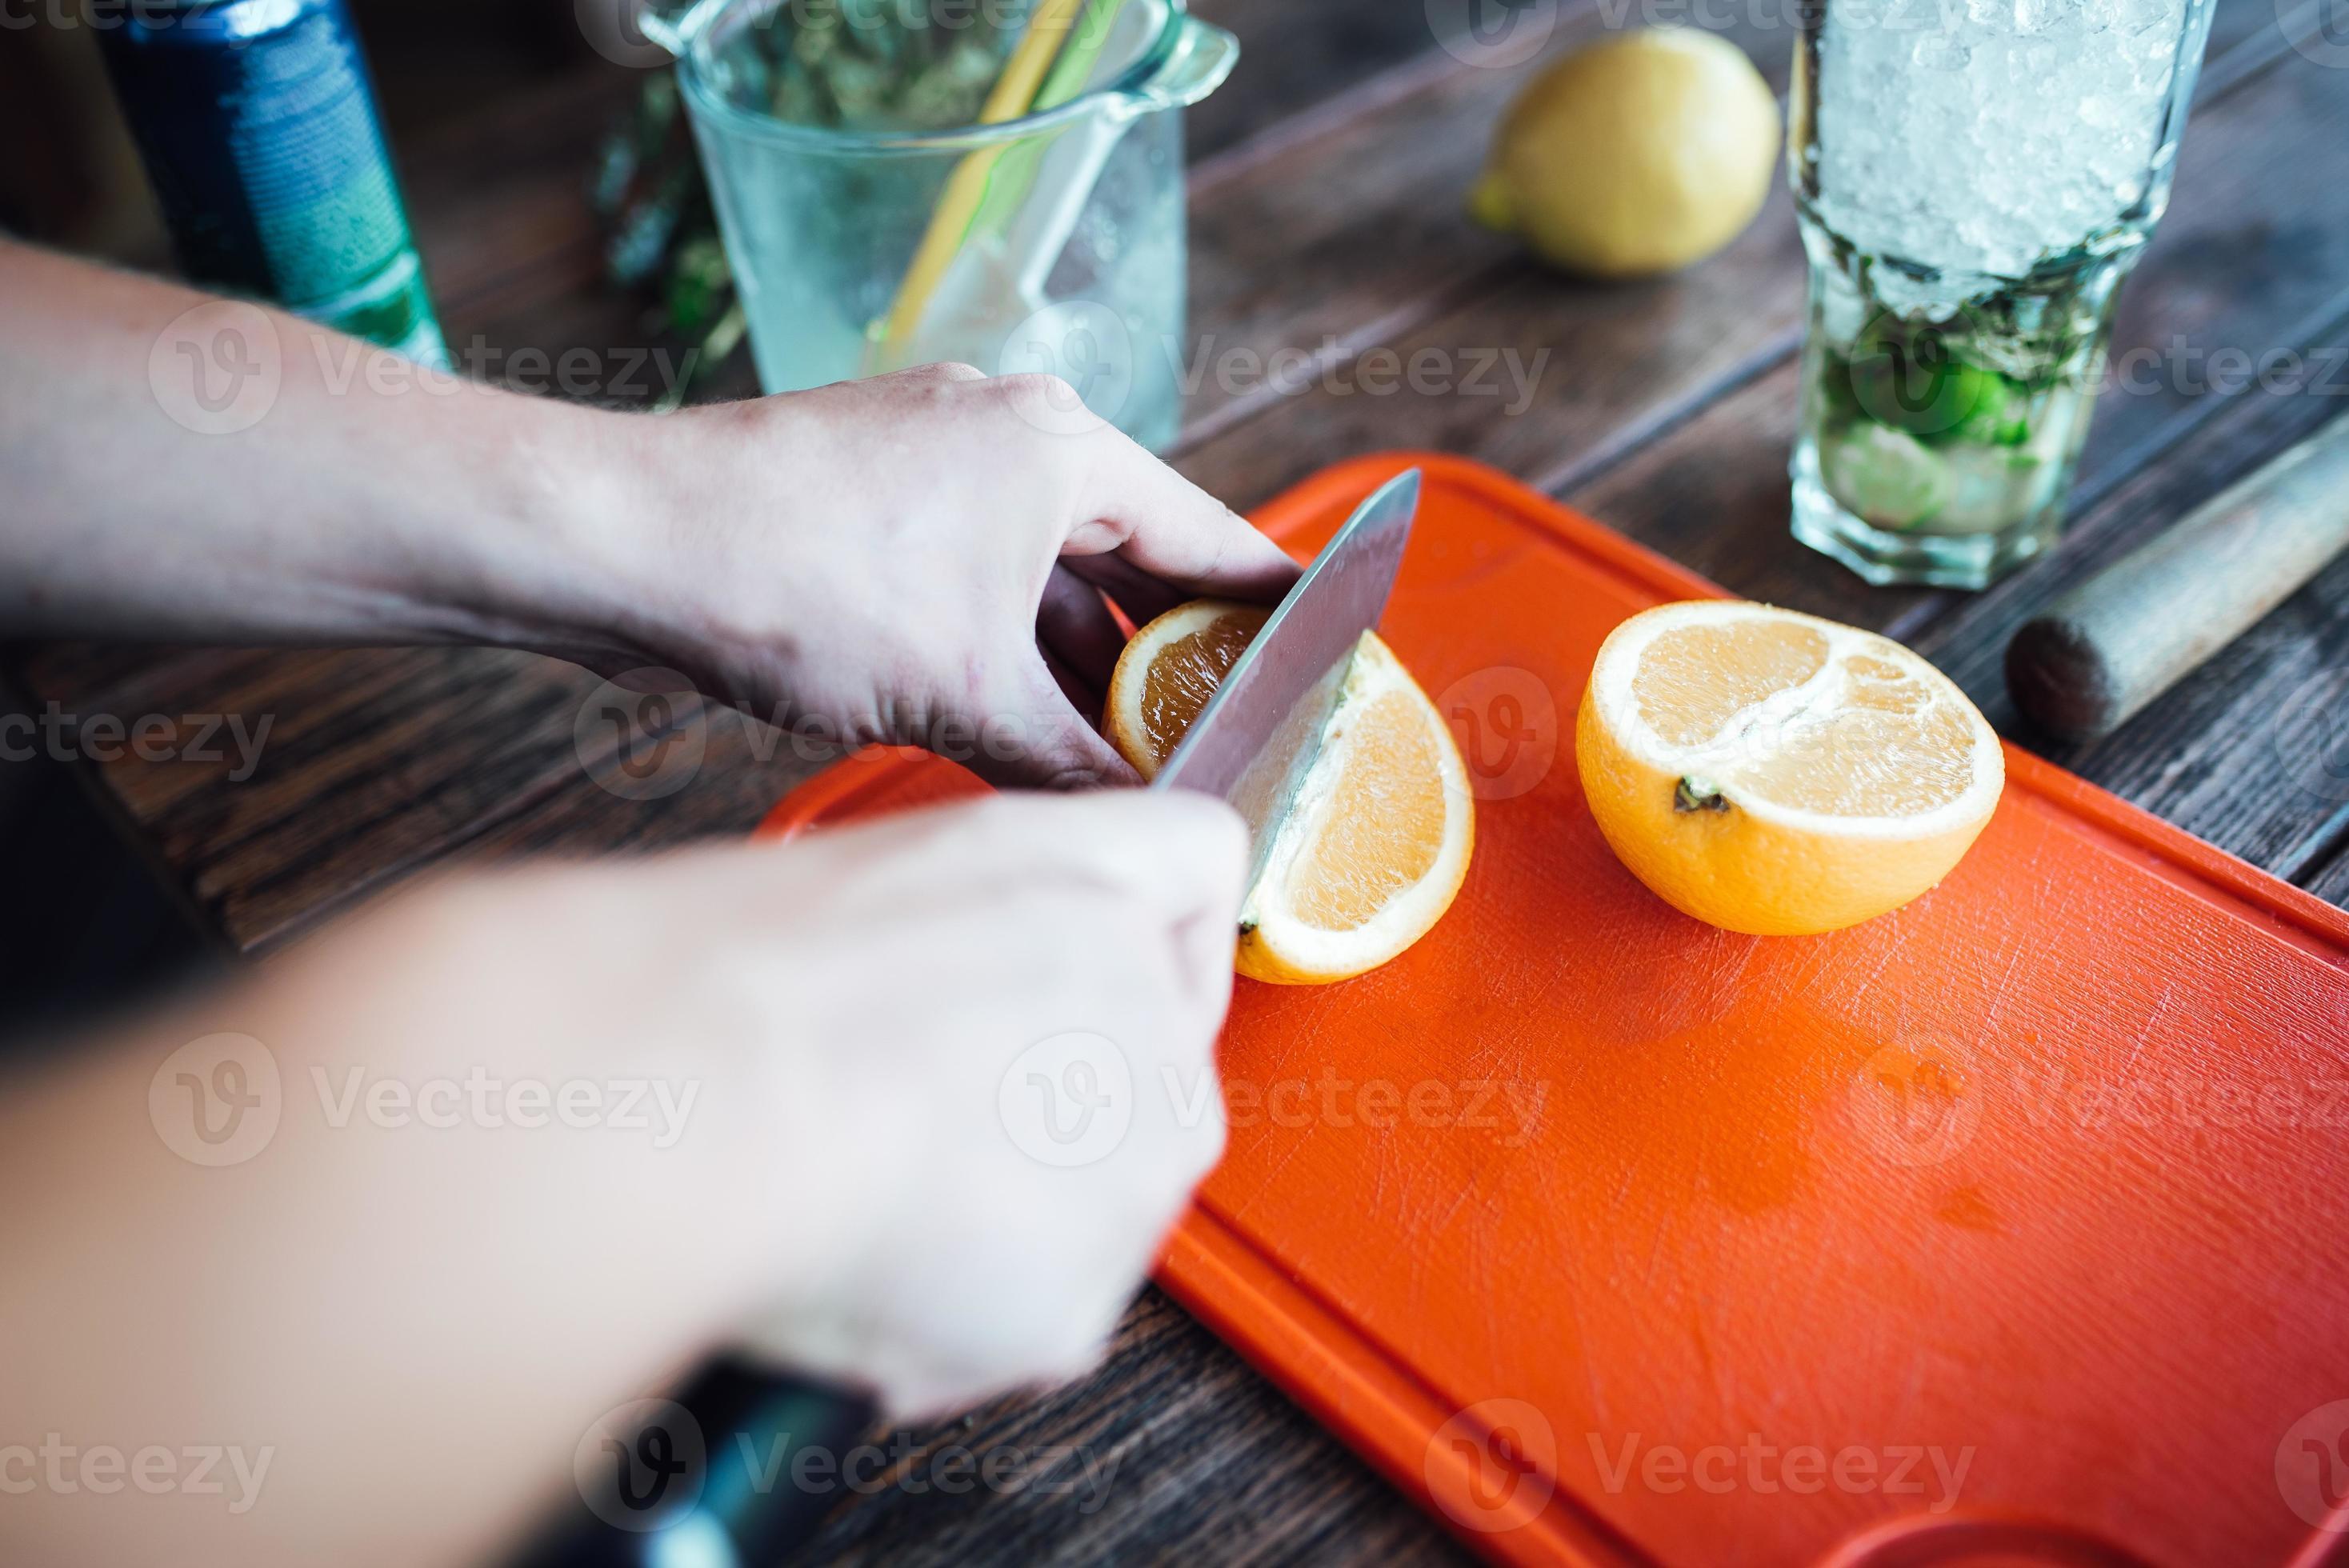 barman prepara coquetel de frutas à base de limão, menta, laranja, refrigerante foto